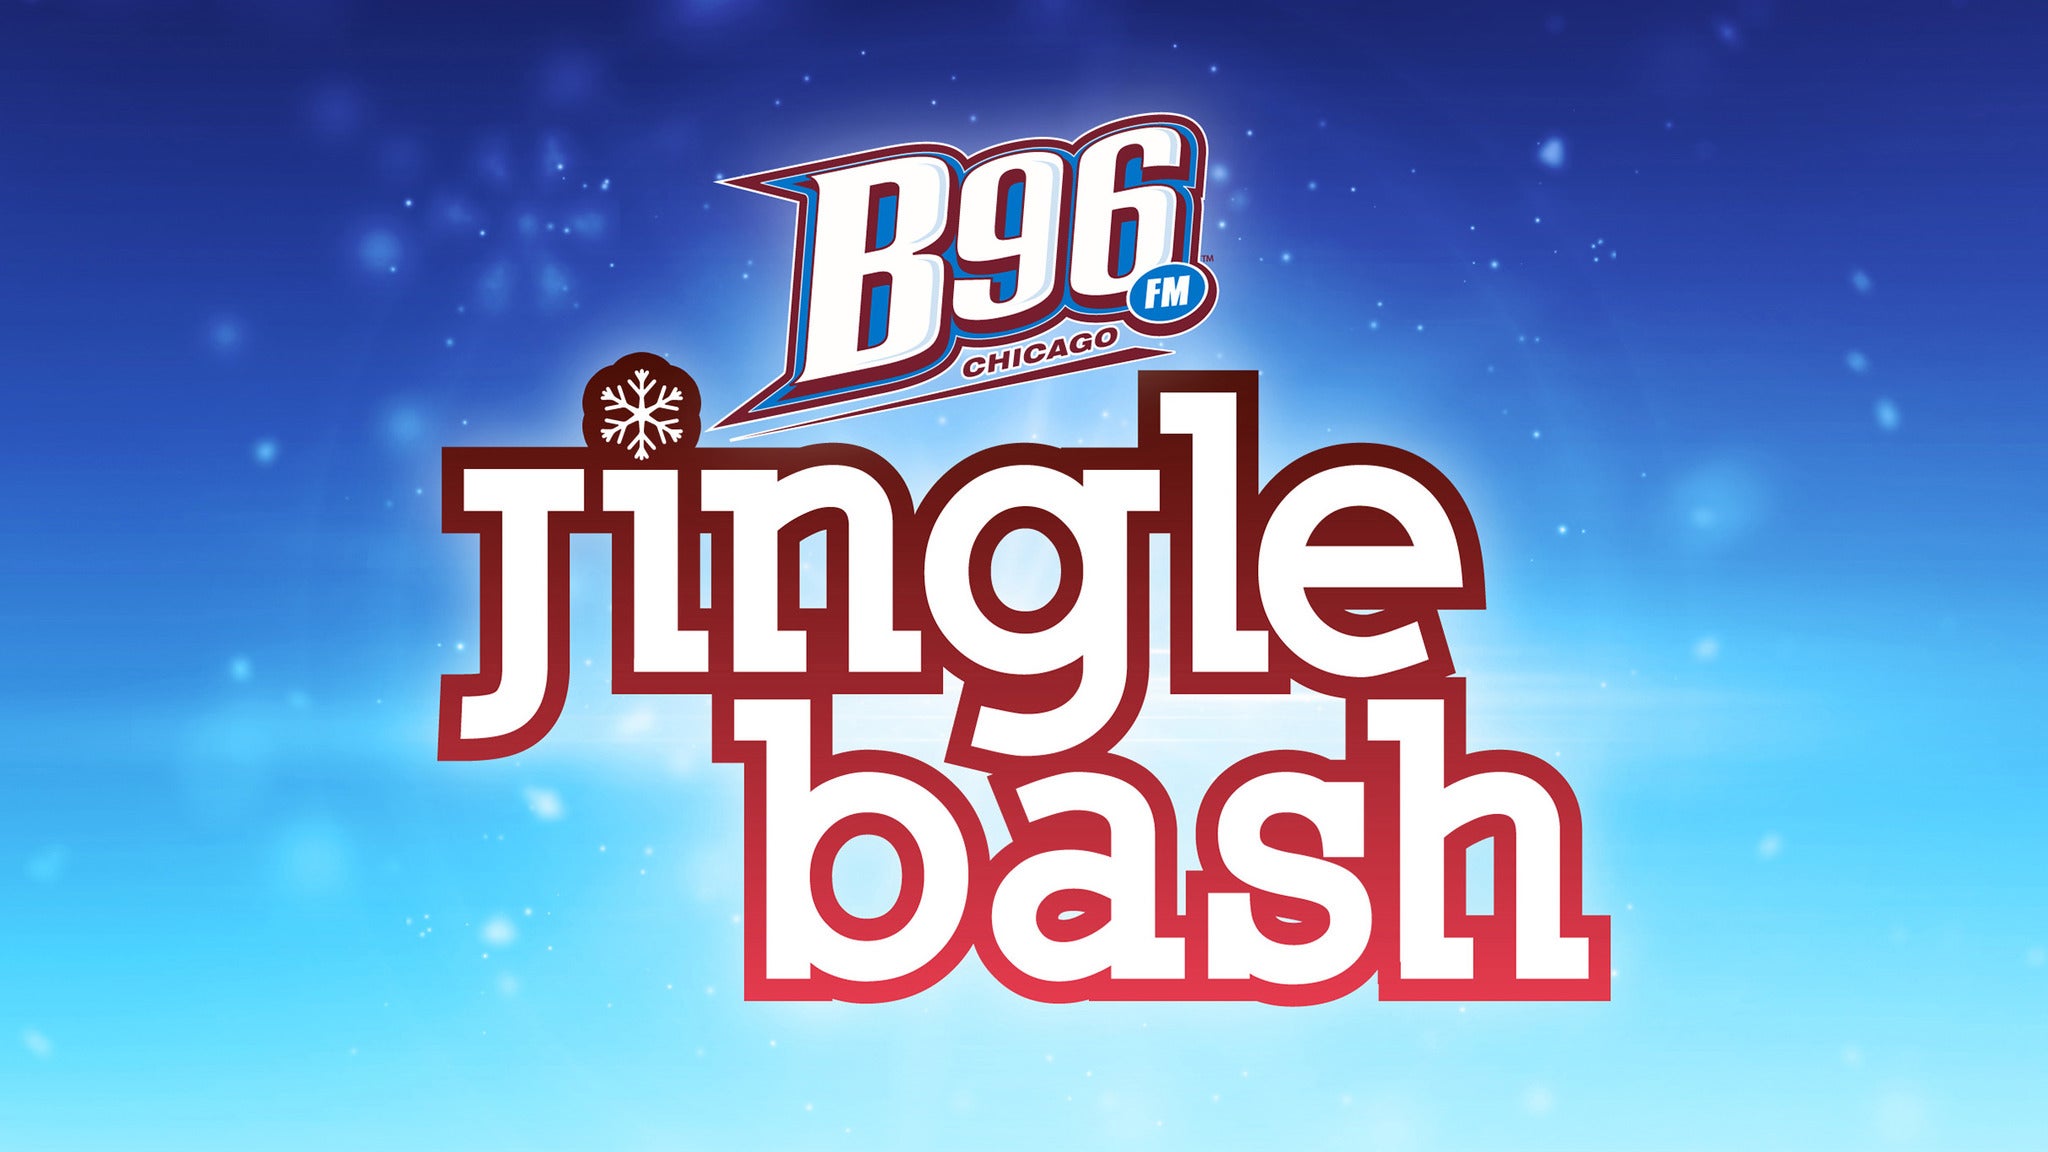 B96 Jingle Bash December 08, 2018 at Allstate Arena in Rosemont, IL 7